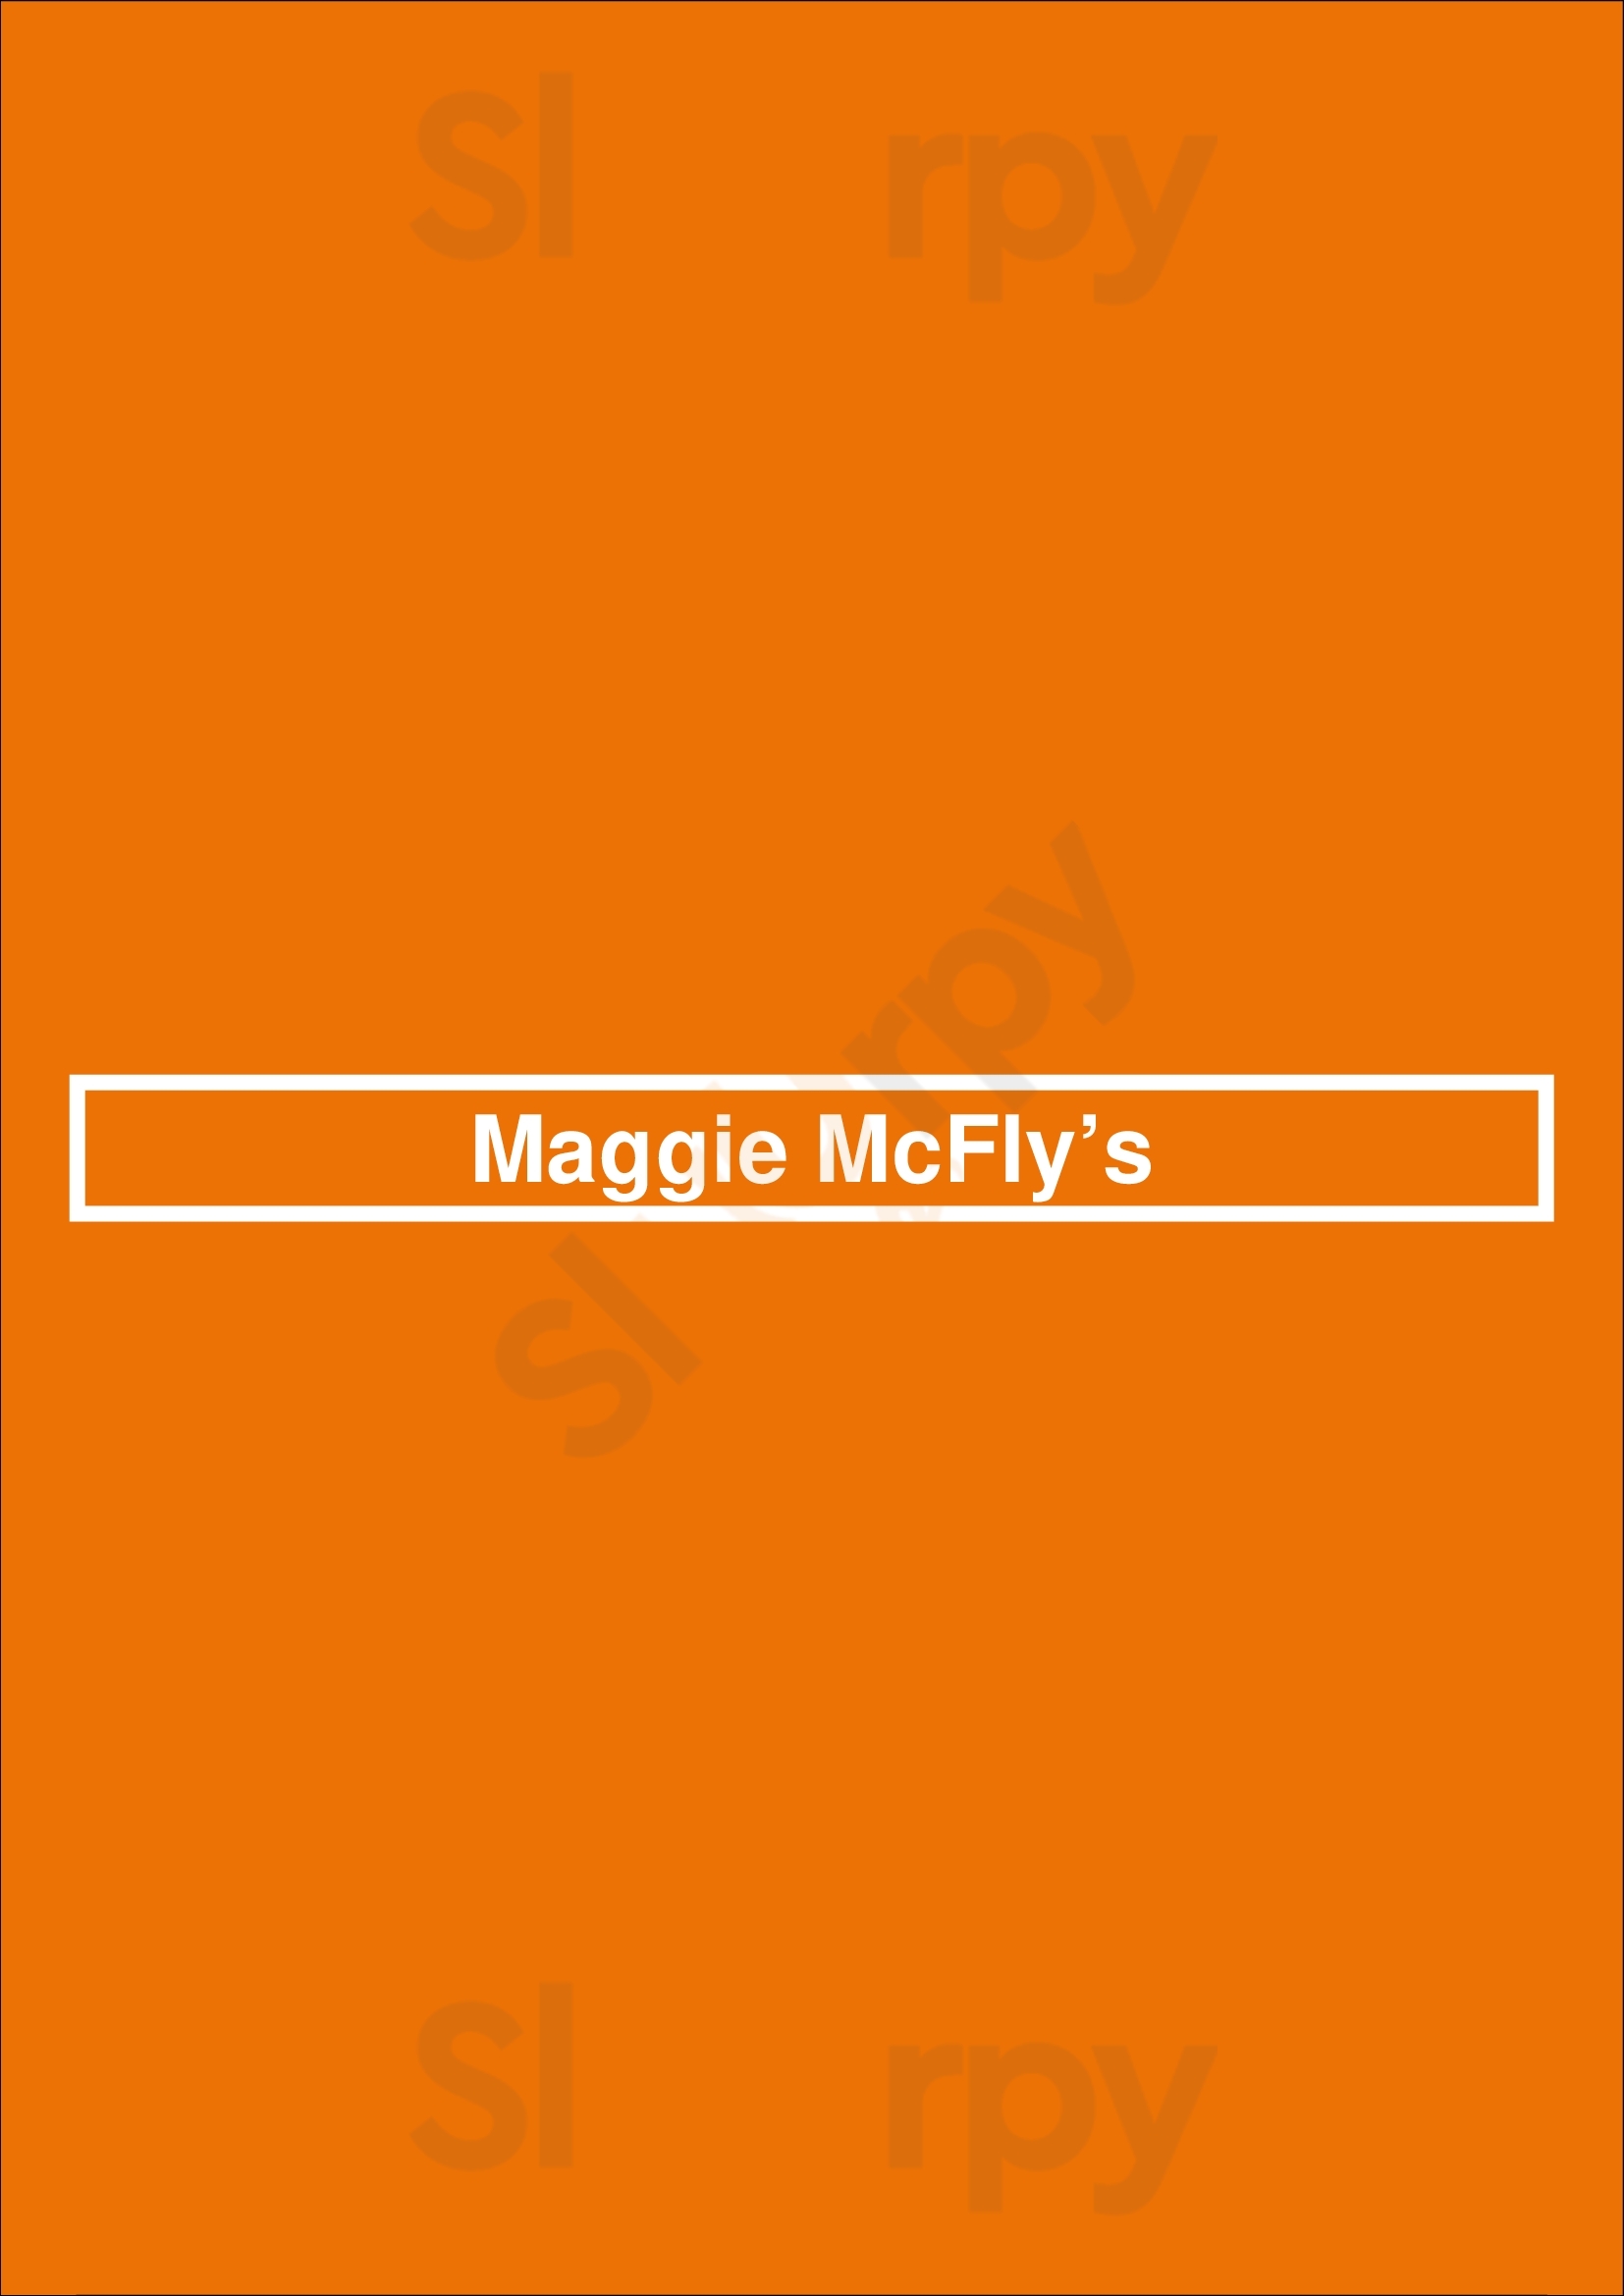 Maggie Mcfly’s Springfield Menu - 1